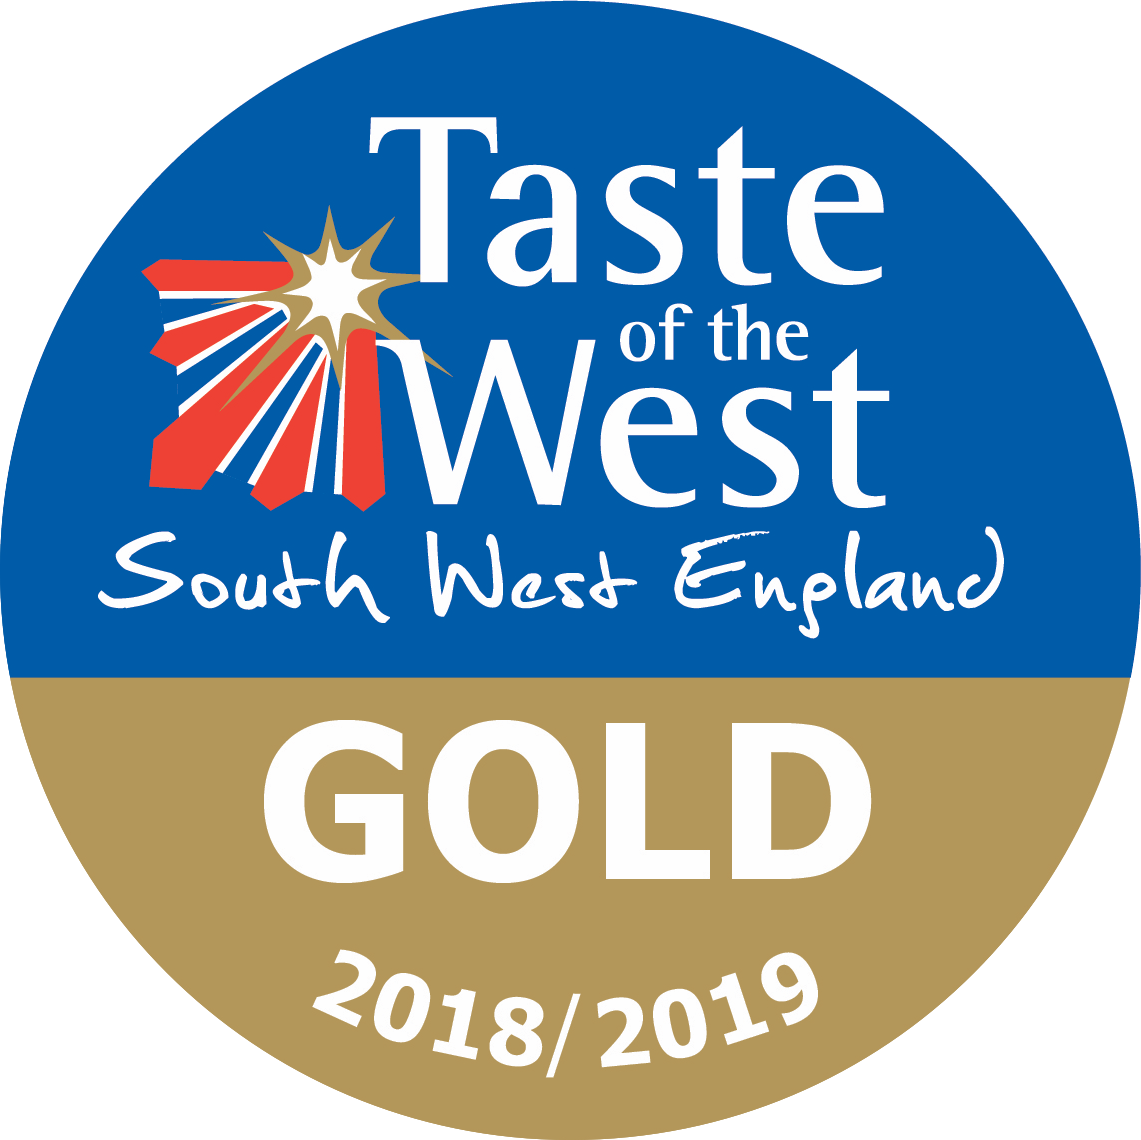 Taste of the West Gold Award 2018-2019 Logo